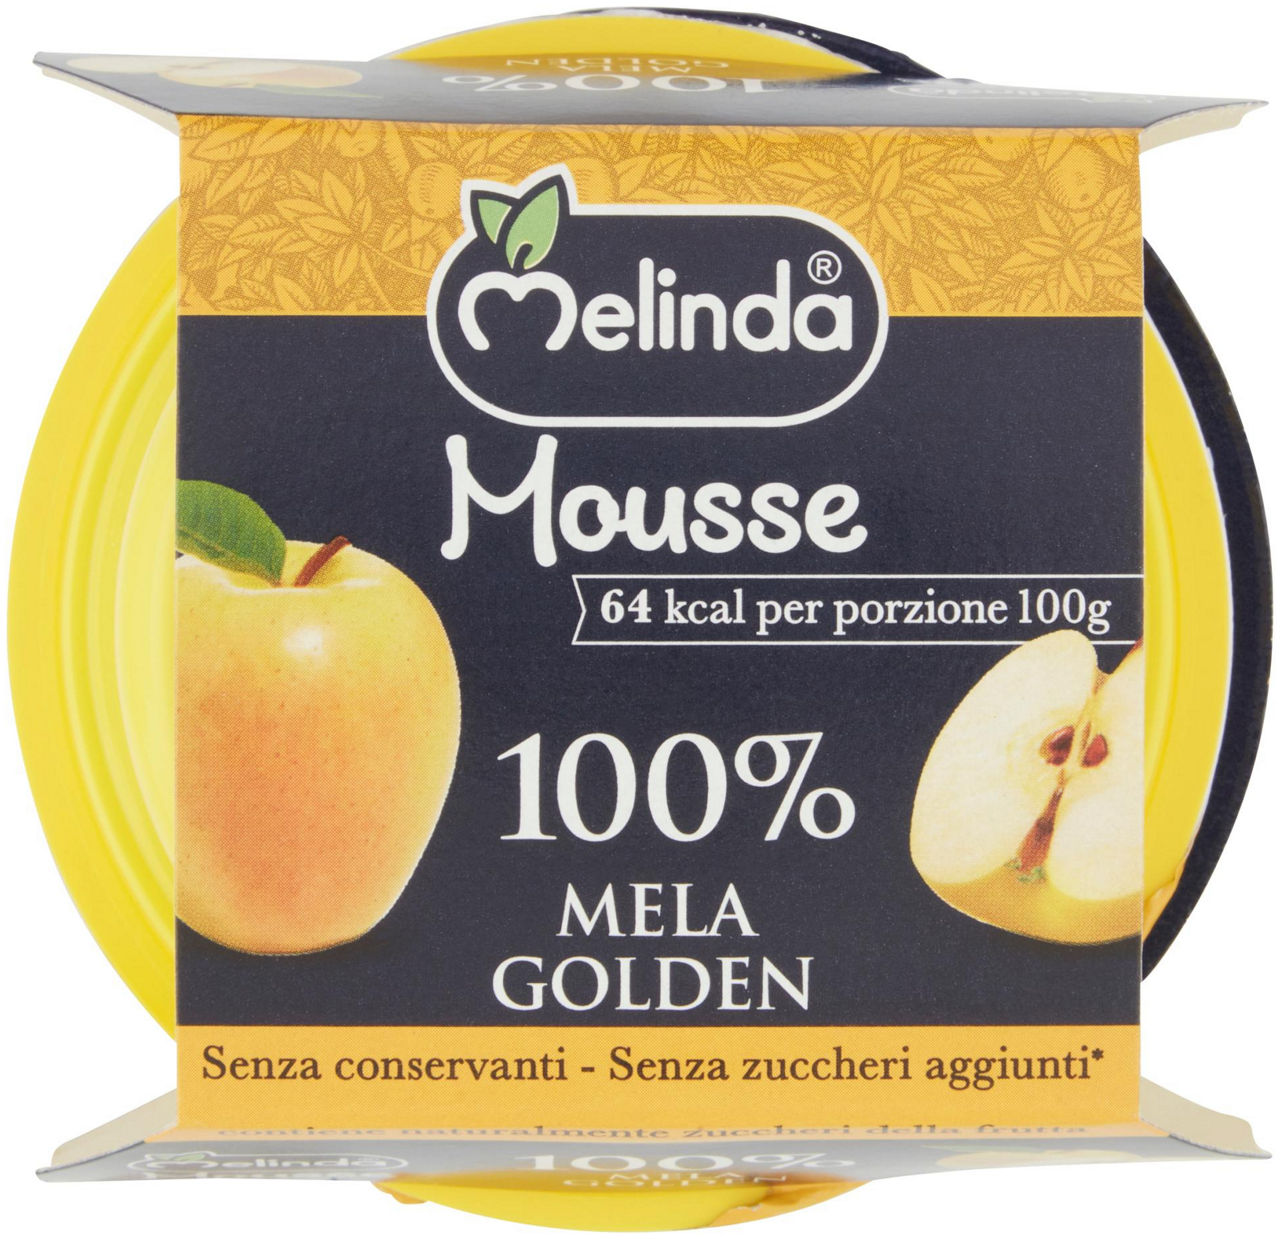 Mousse 100% mela golden 2 x 100 g